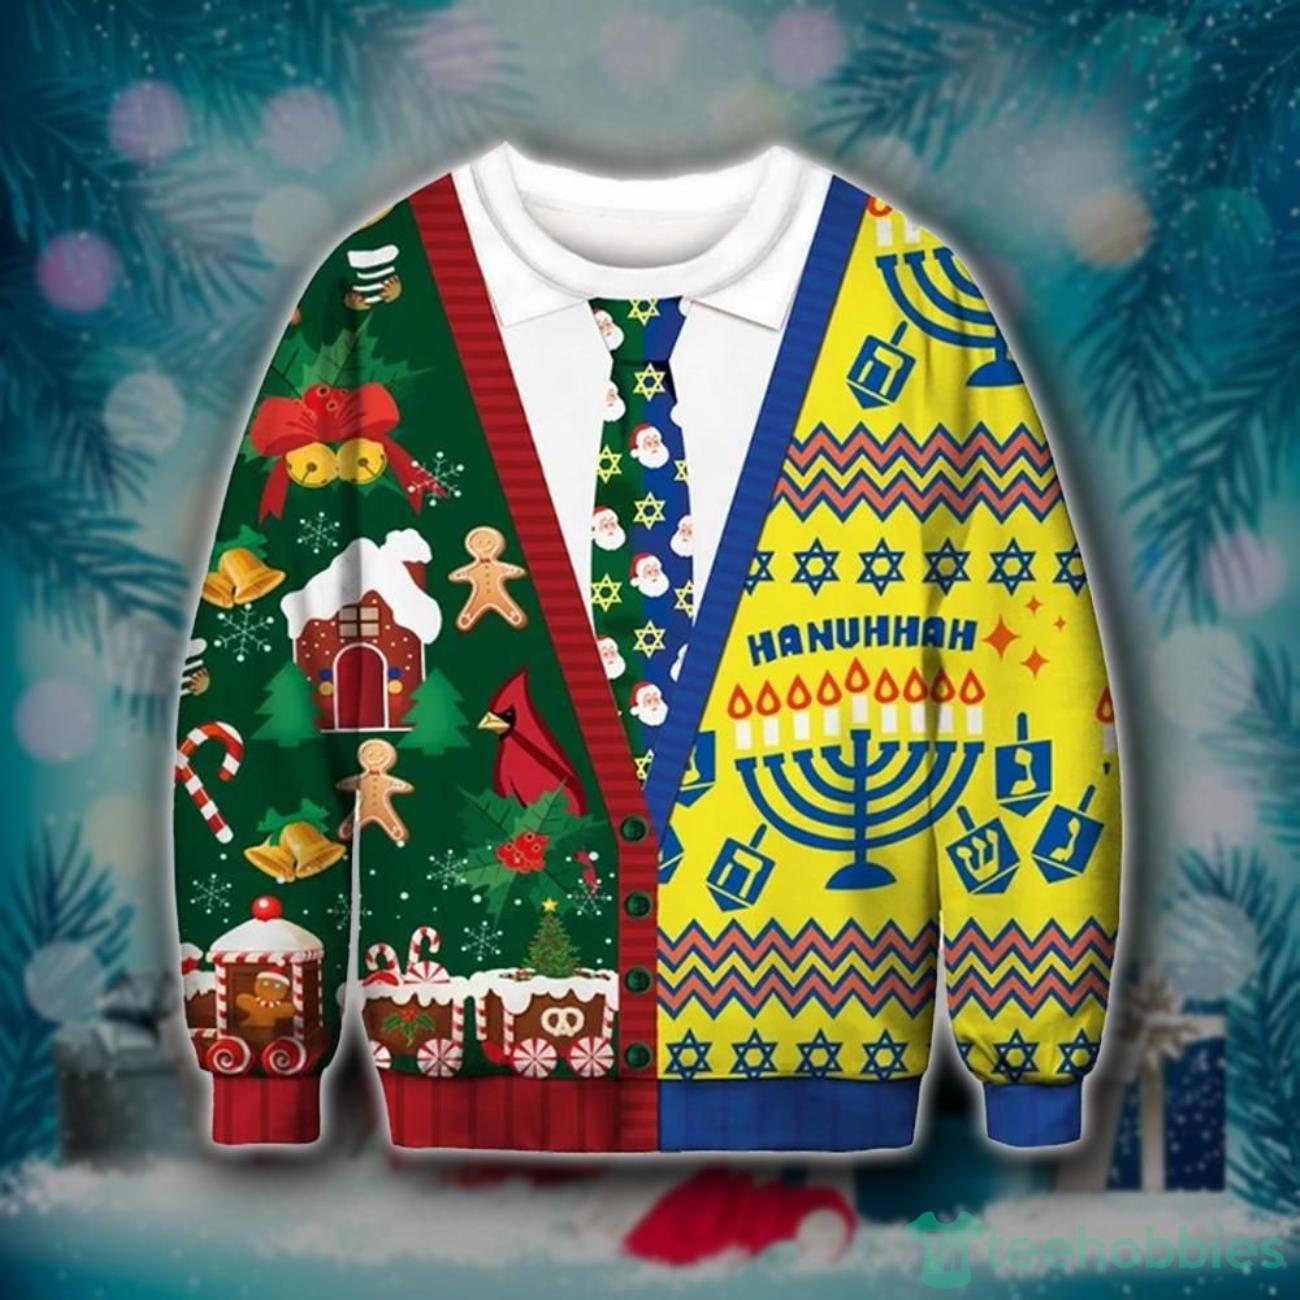 Hanuhhah Ugly Christmas Sweater Product Photo 1